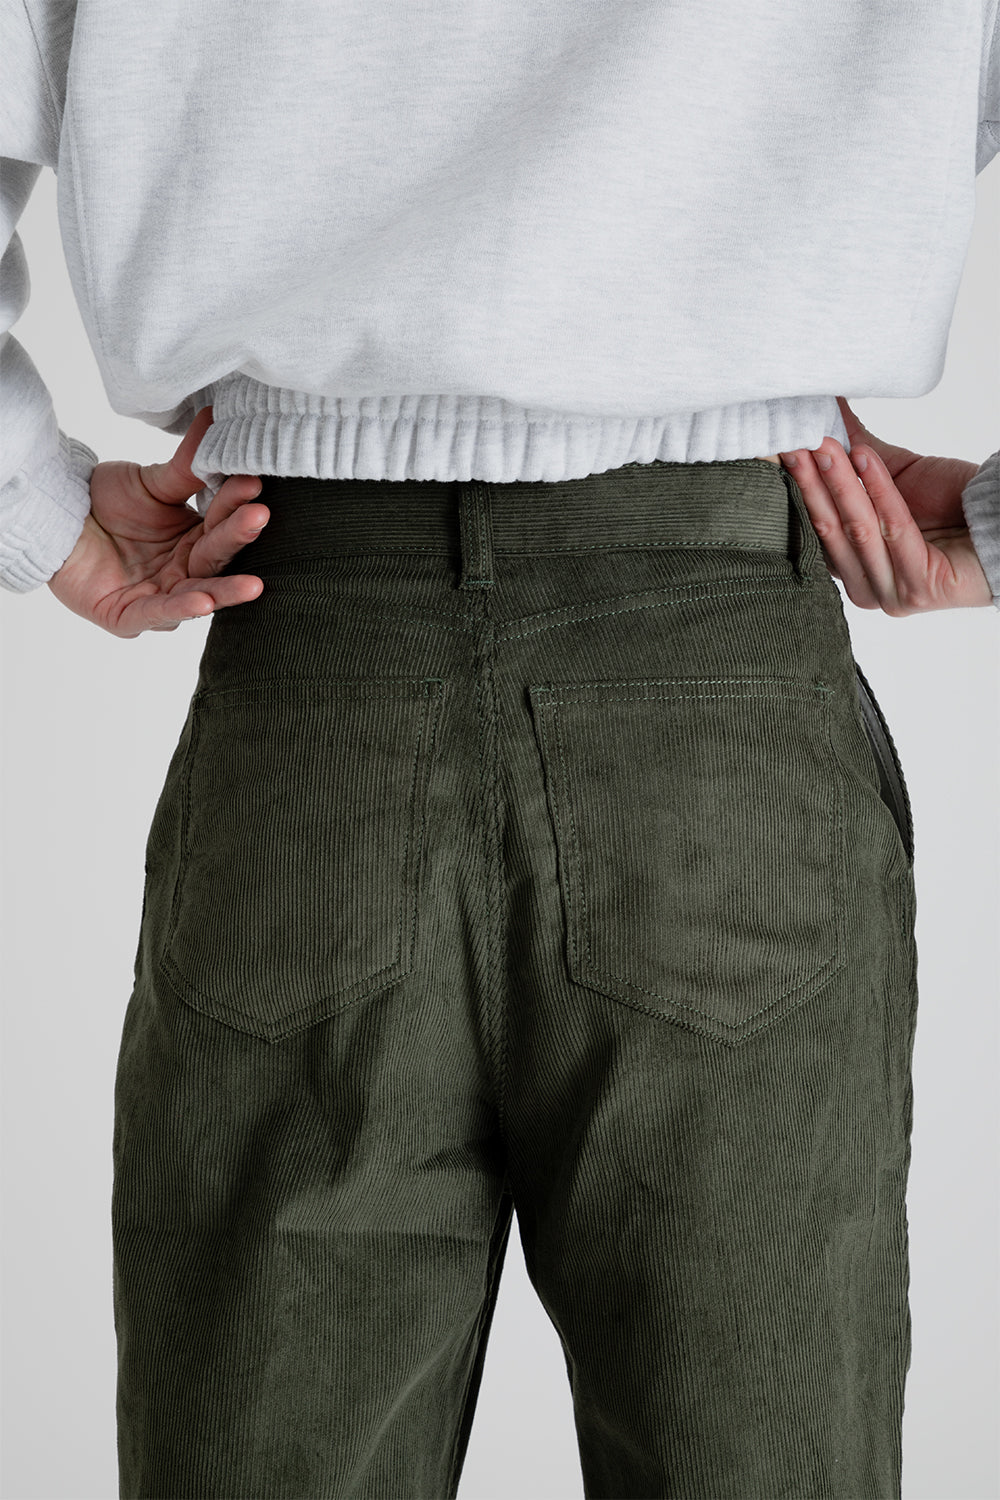 Frizmworks Corduroy Comfort Two Tuck Pants in Olive